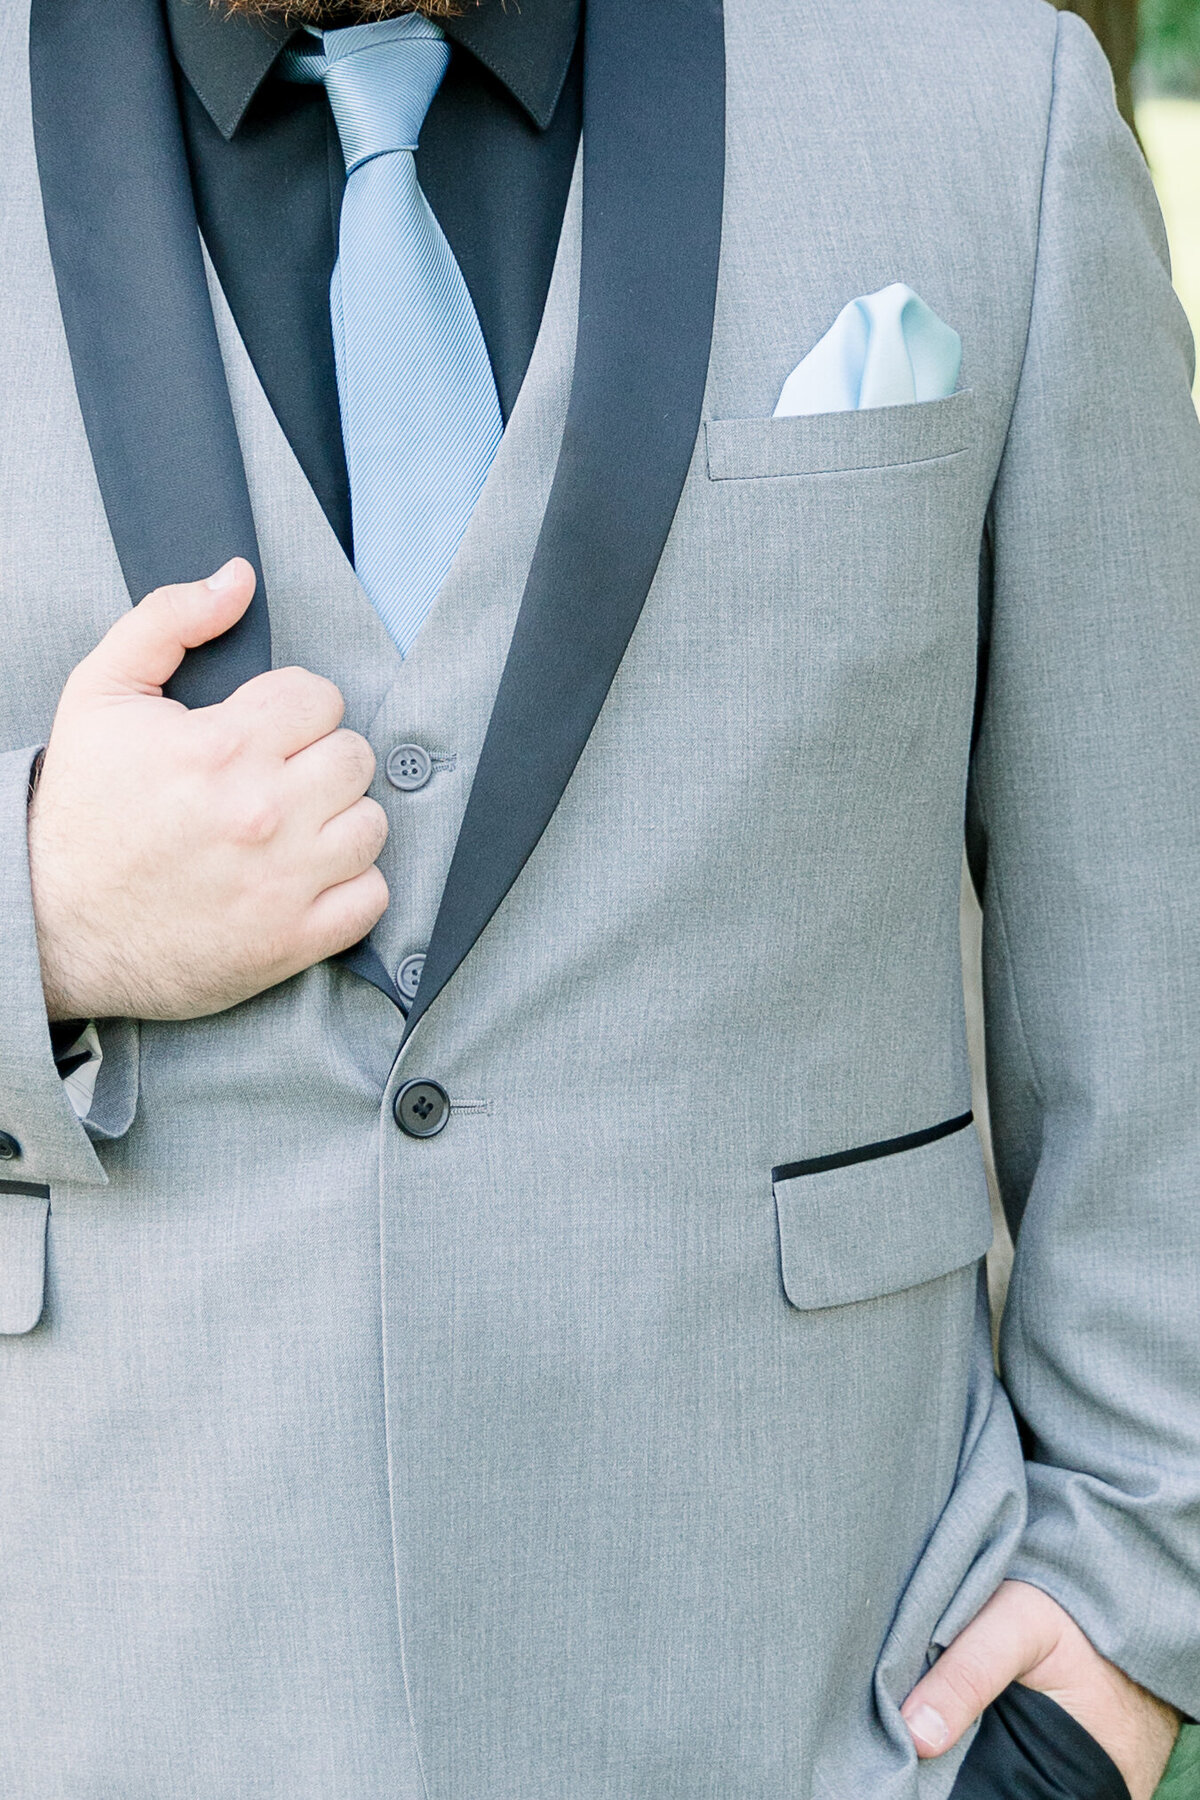 groom suit details taken by Spokane Wedding Photographer